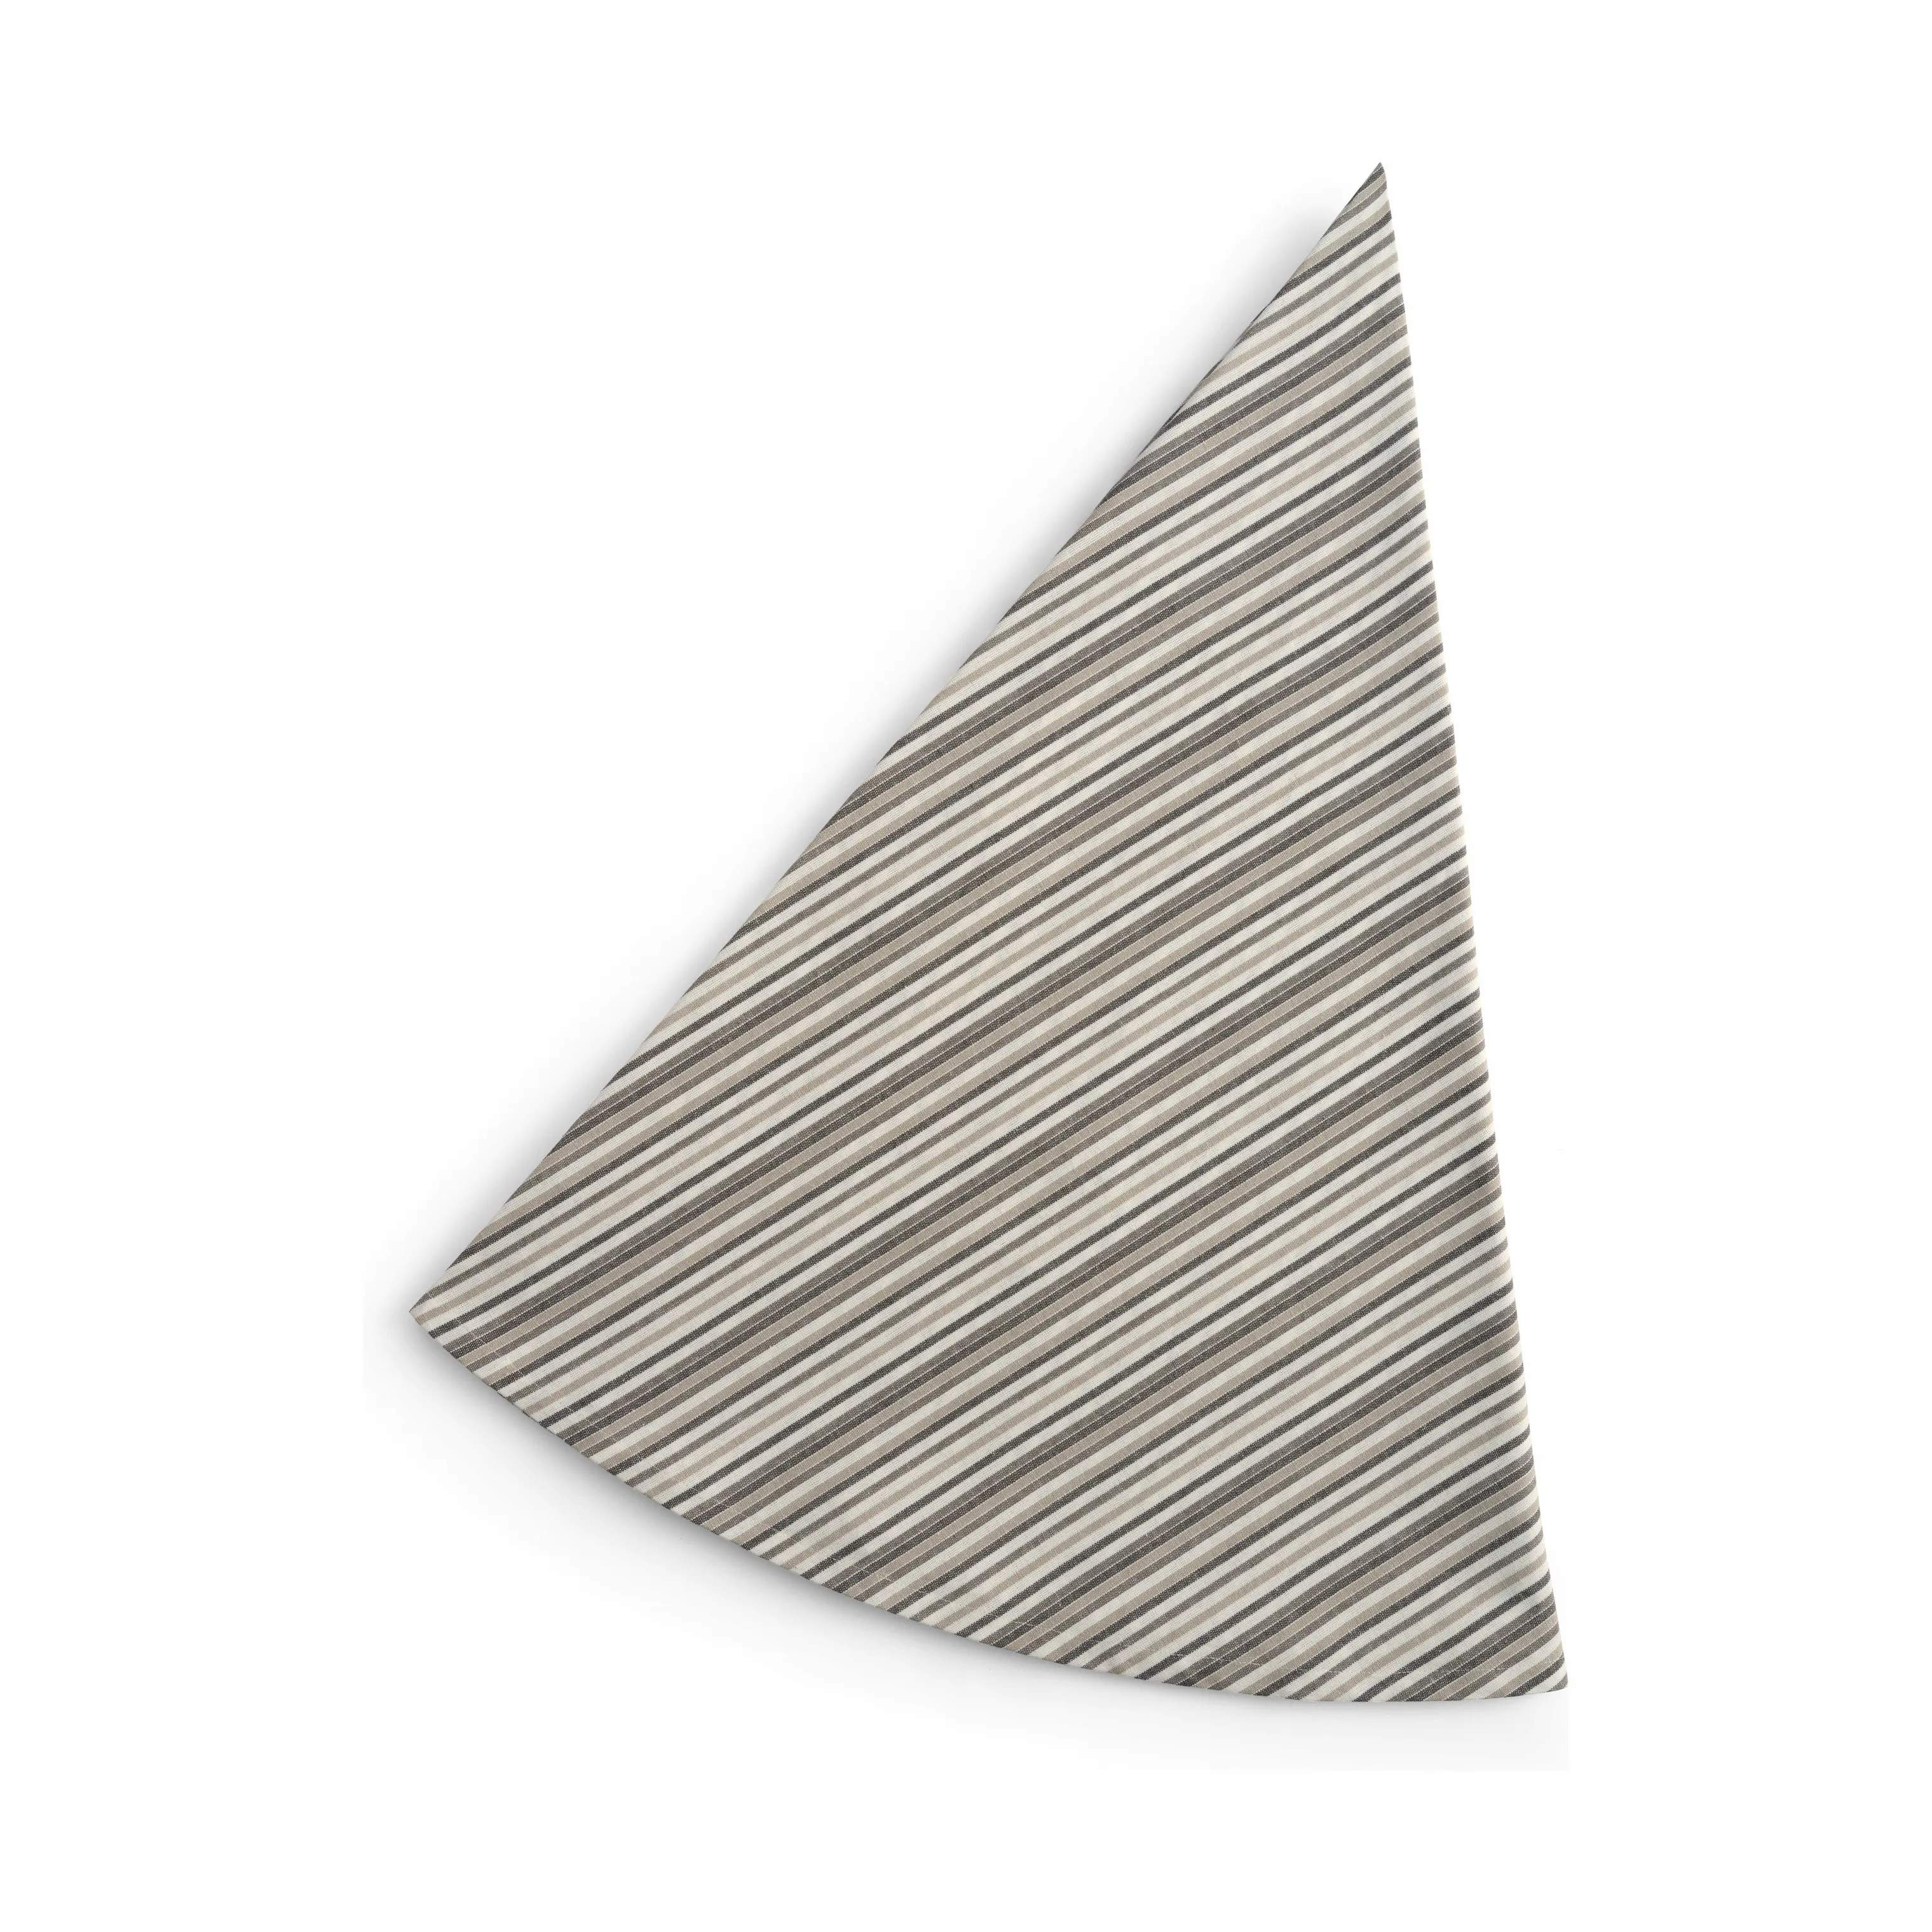 Small Stripes Dug, small stripes, large